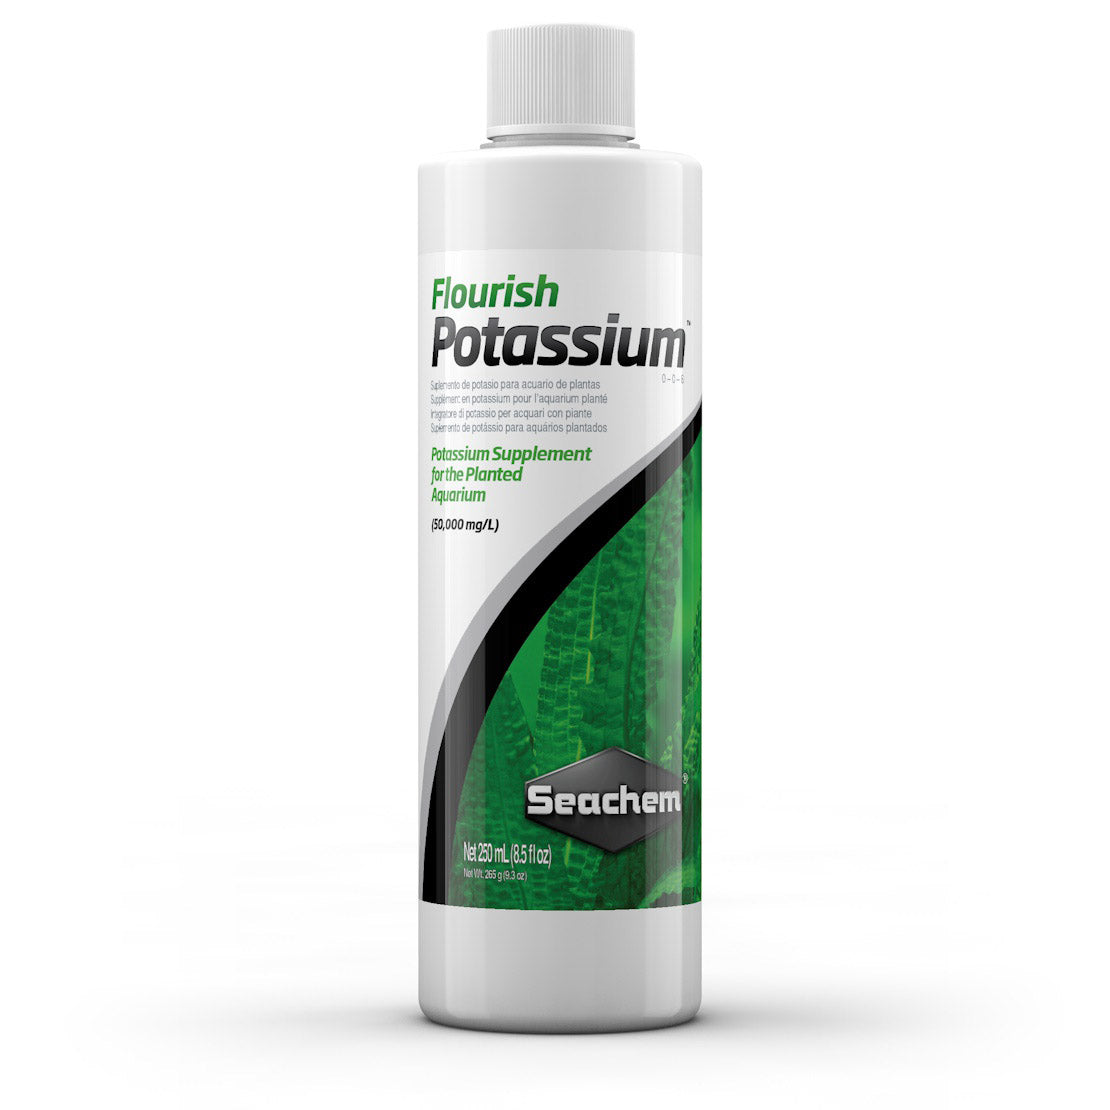 New Seachem Flourish Potassium 250ml, supplement for live plants